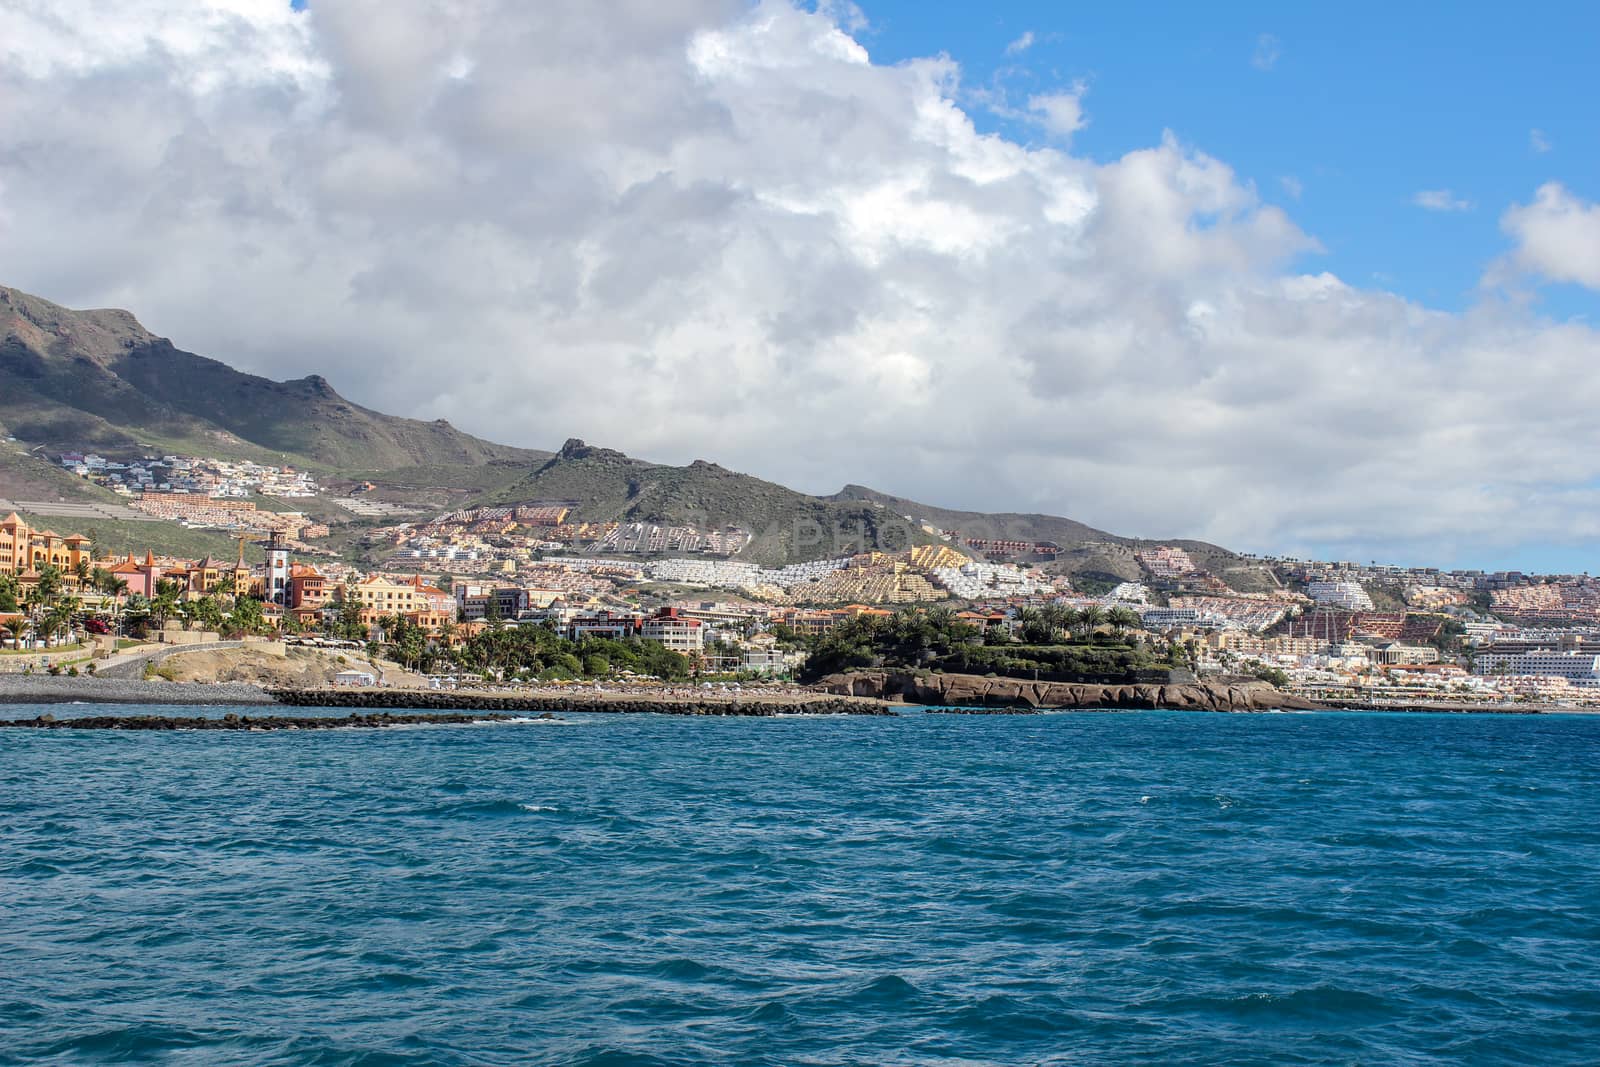 View on the beach of Costa Adeje, Tenerife by reinerc